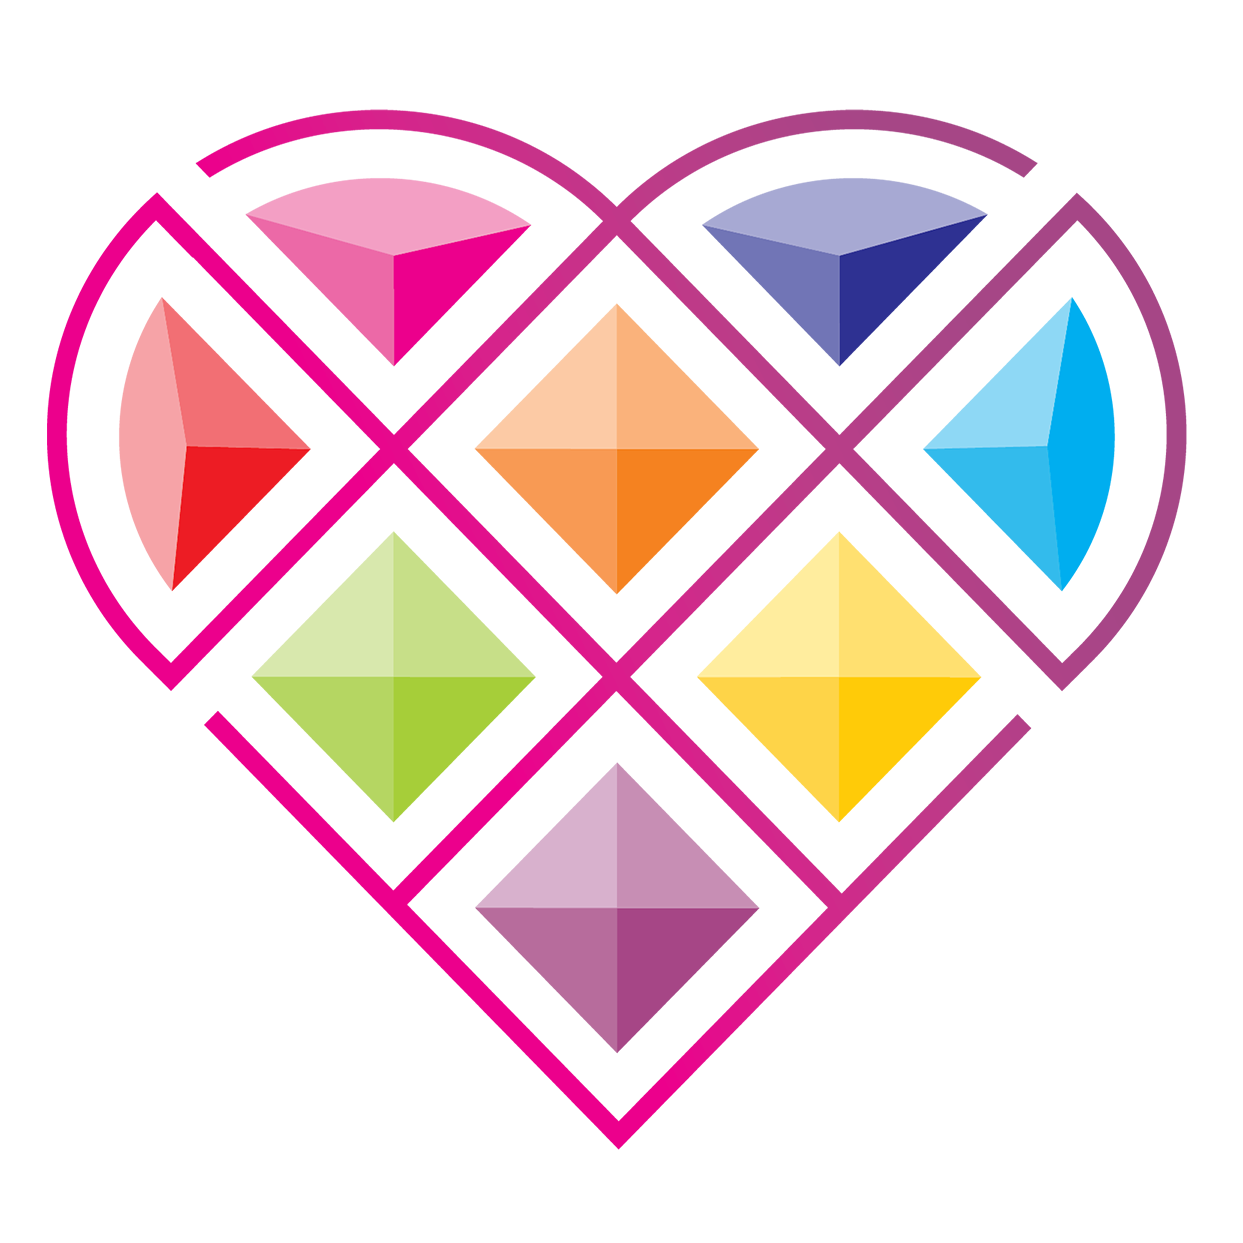 Heartful Diamonds logo